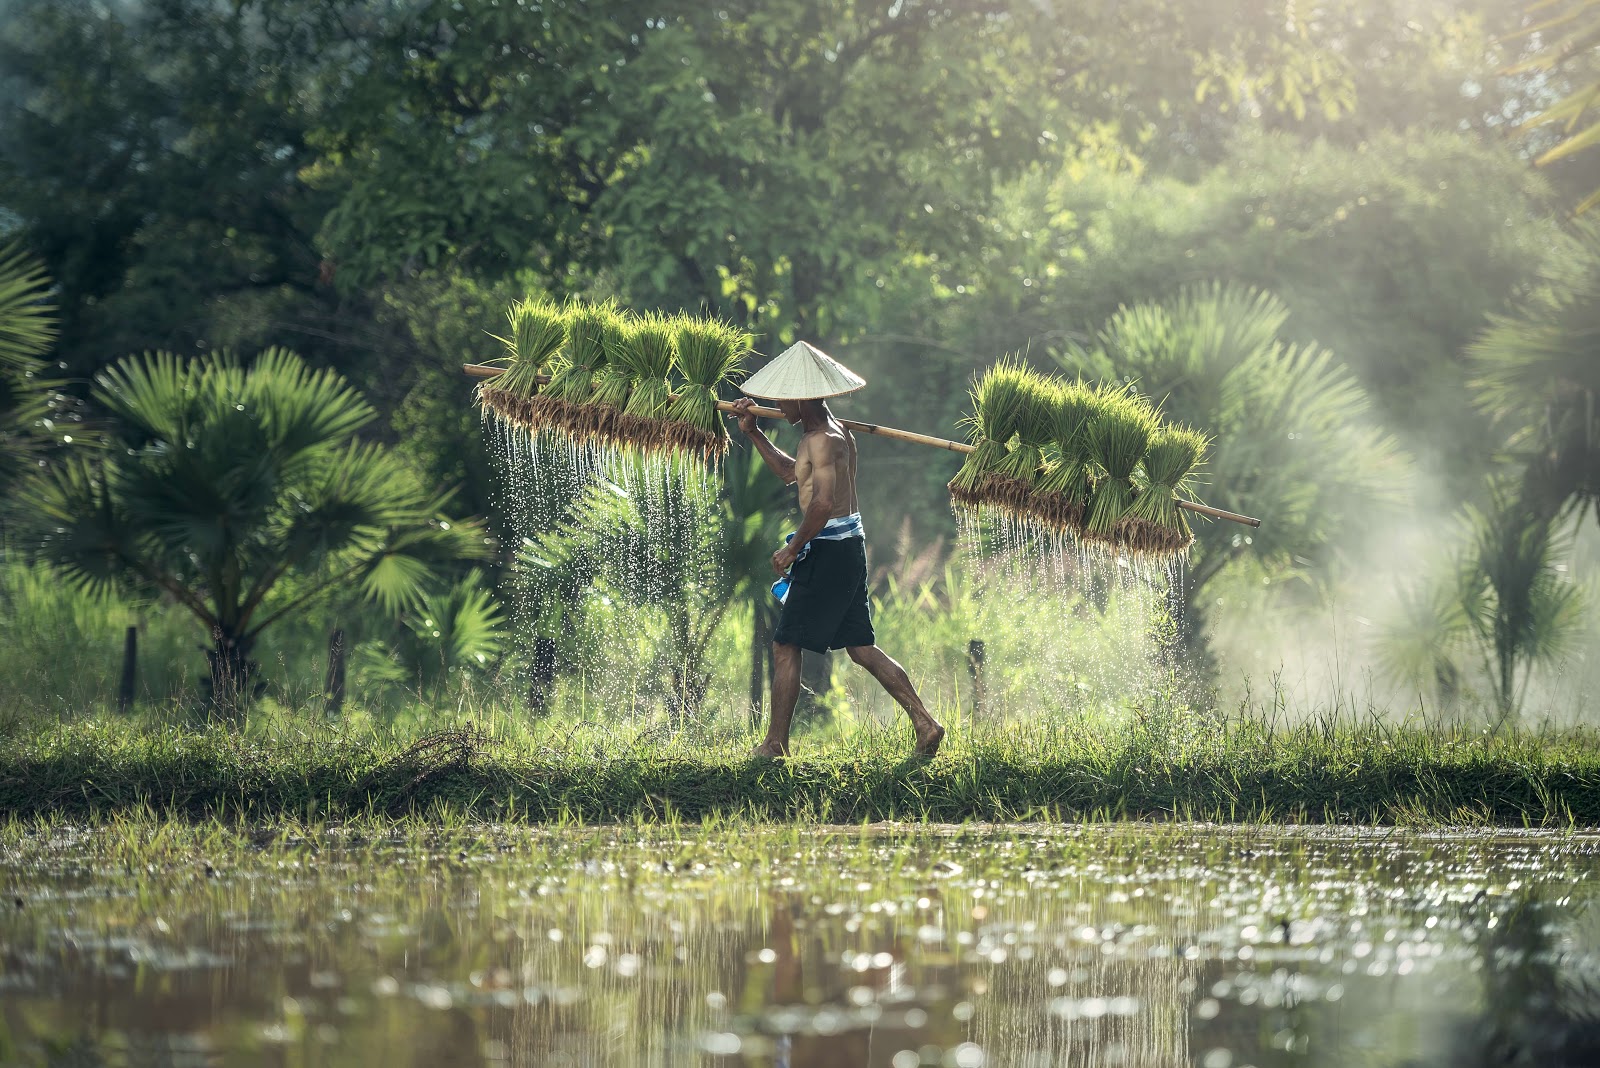 A male rice farmer carries harvested rice as he walks alongside a sunny rice paddy